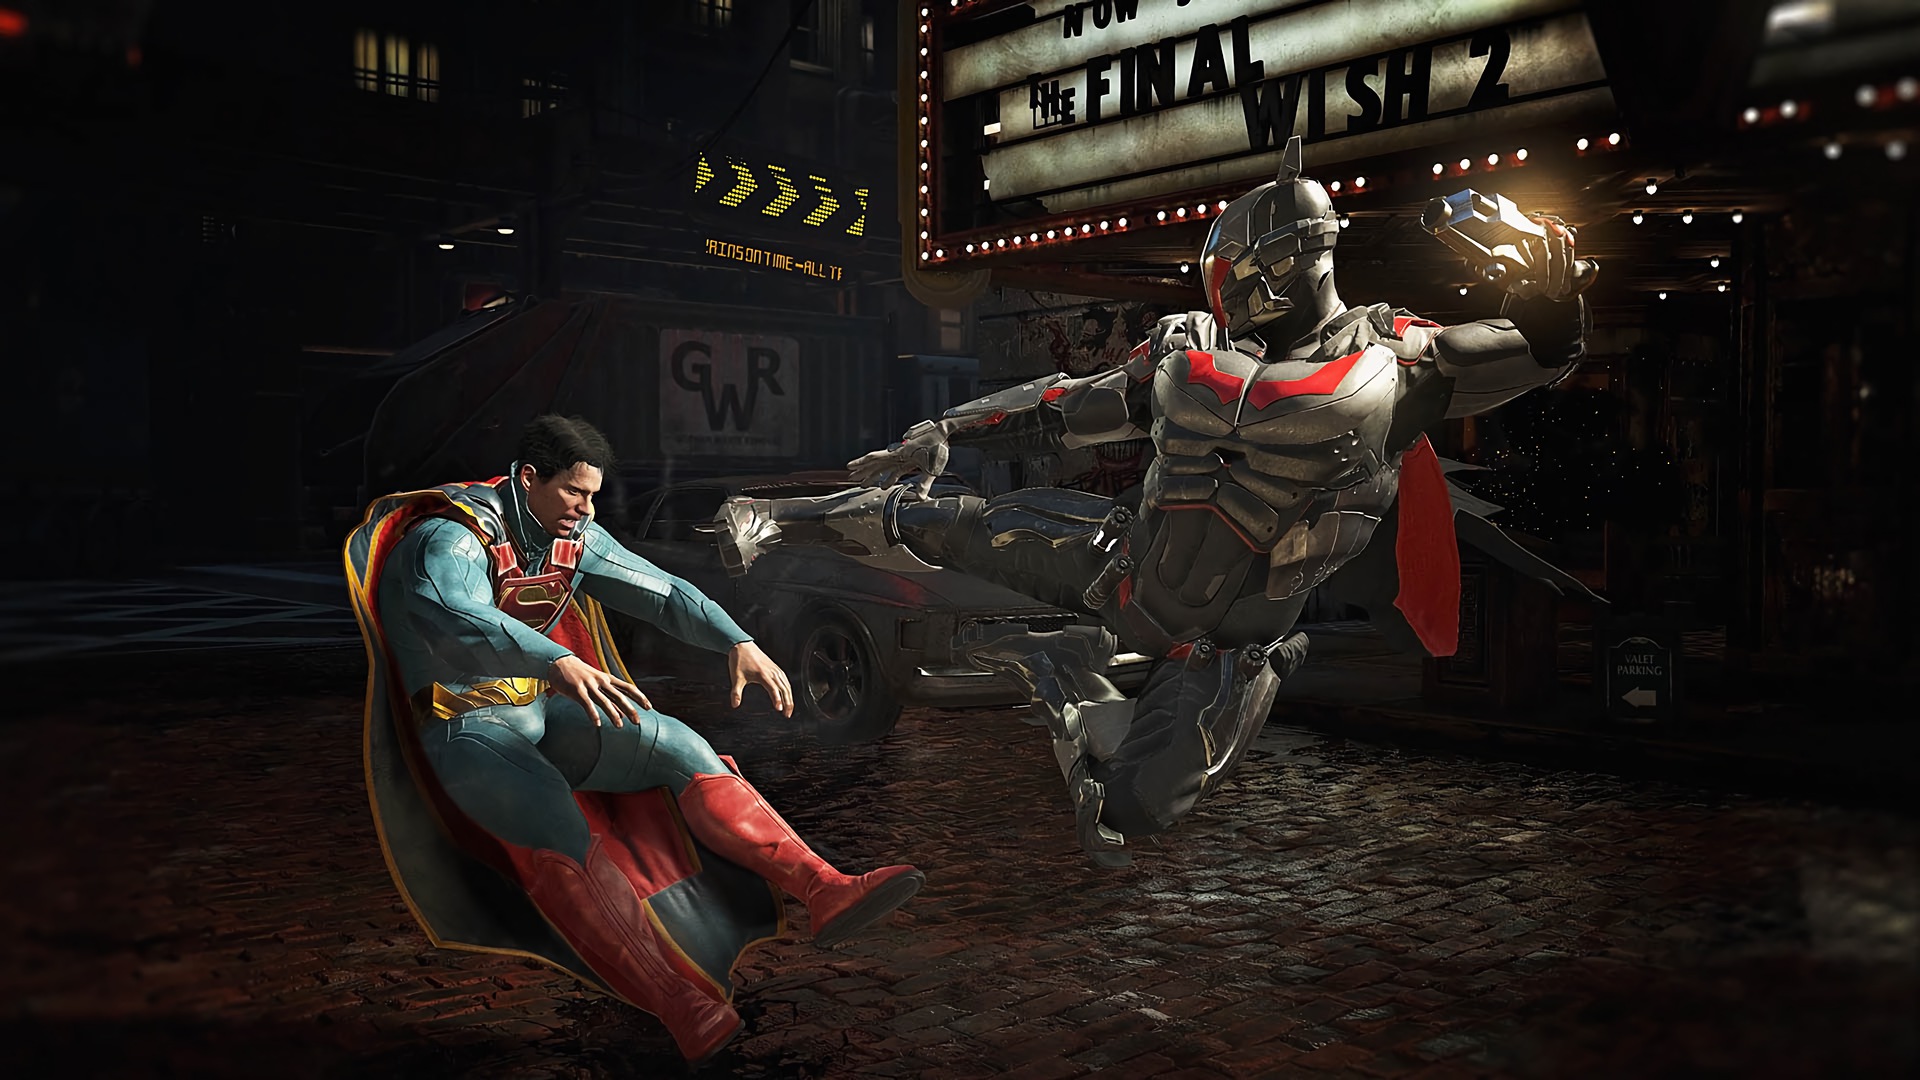 Descarga gratuita de fondo de pantalla para móvil de Superhombre, Videojuego, Hombre Murciélago, Injustice: Gods Among Us, Injustice 2.